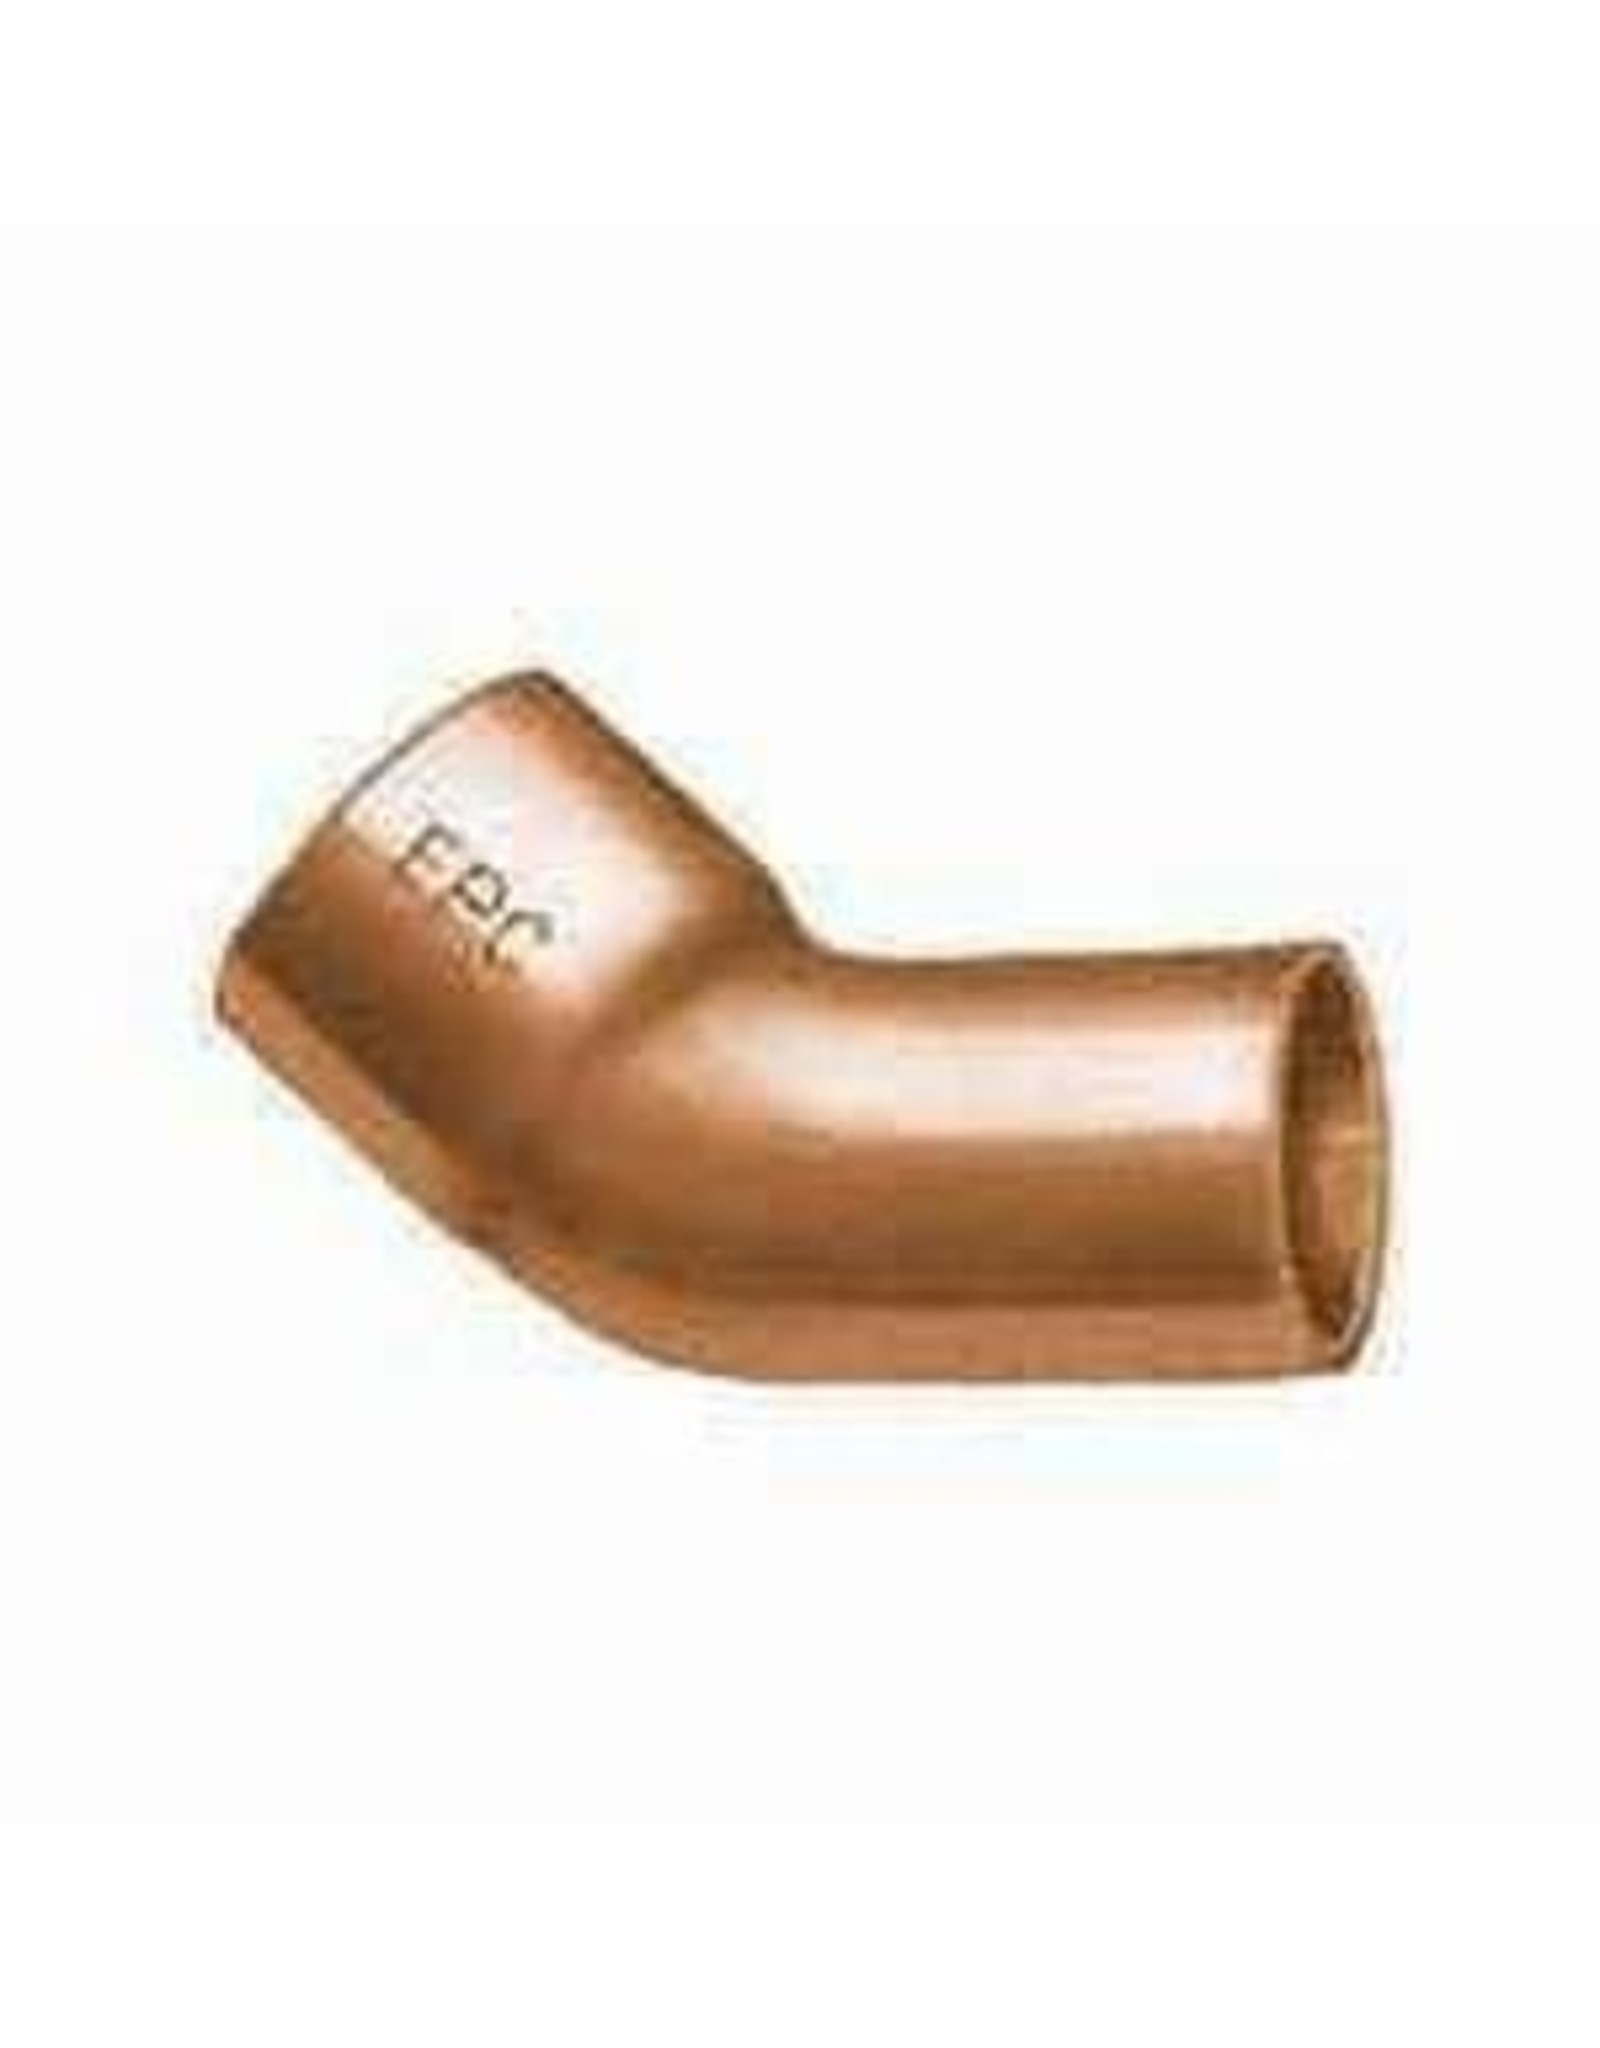 Elkhart EPC 31194 Street Pipe Elbow, 1/2 in, C x FTG, Sweat, 45 deg Angle, Wrot Copper